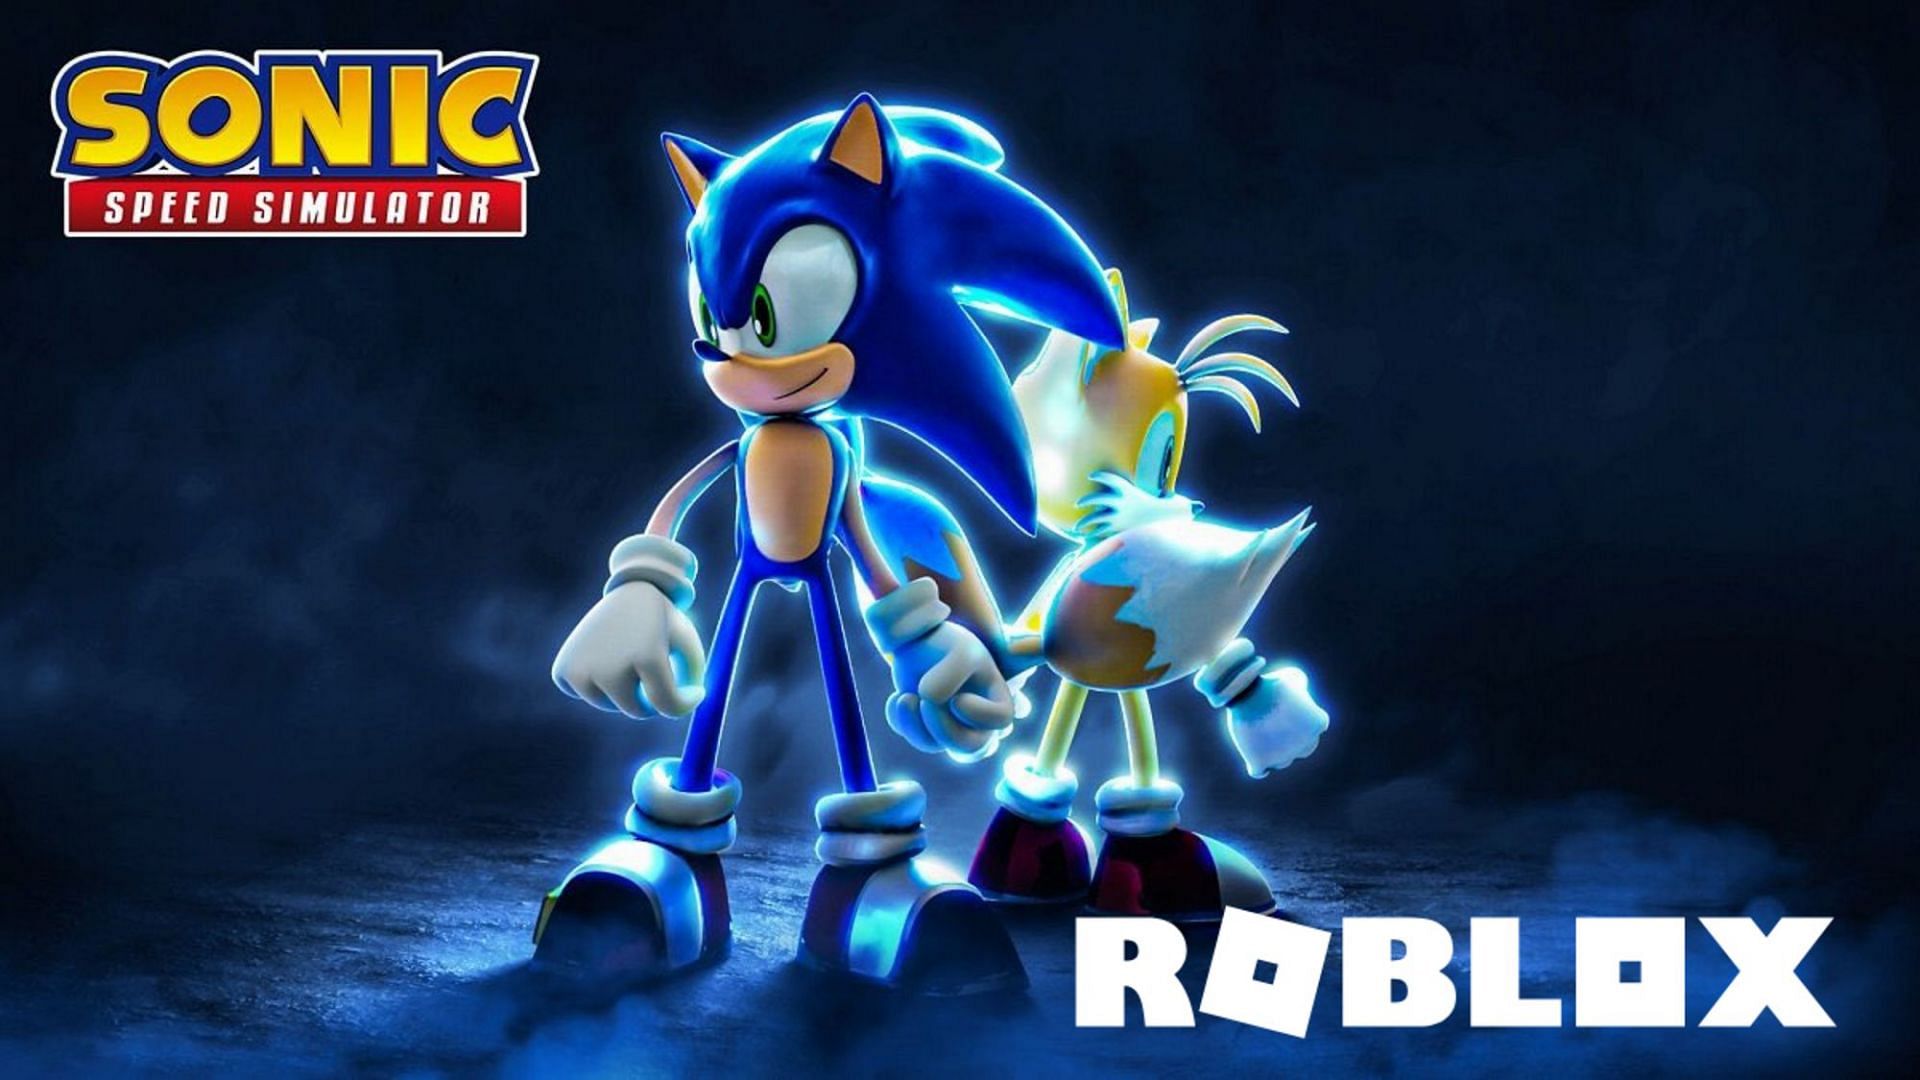 Ways to obtain Riders Sonic Skin in Sonic Speed Simulator Roblox (Image via Roblox)